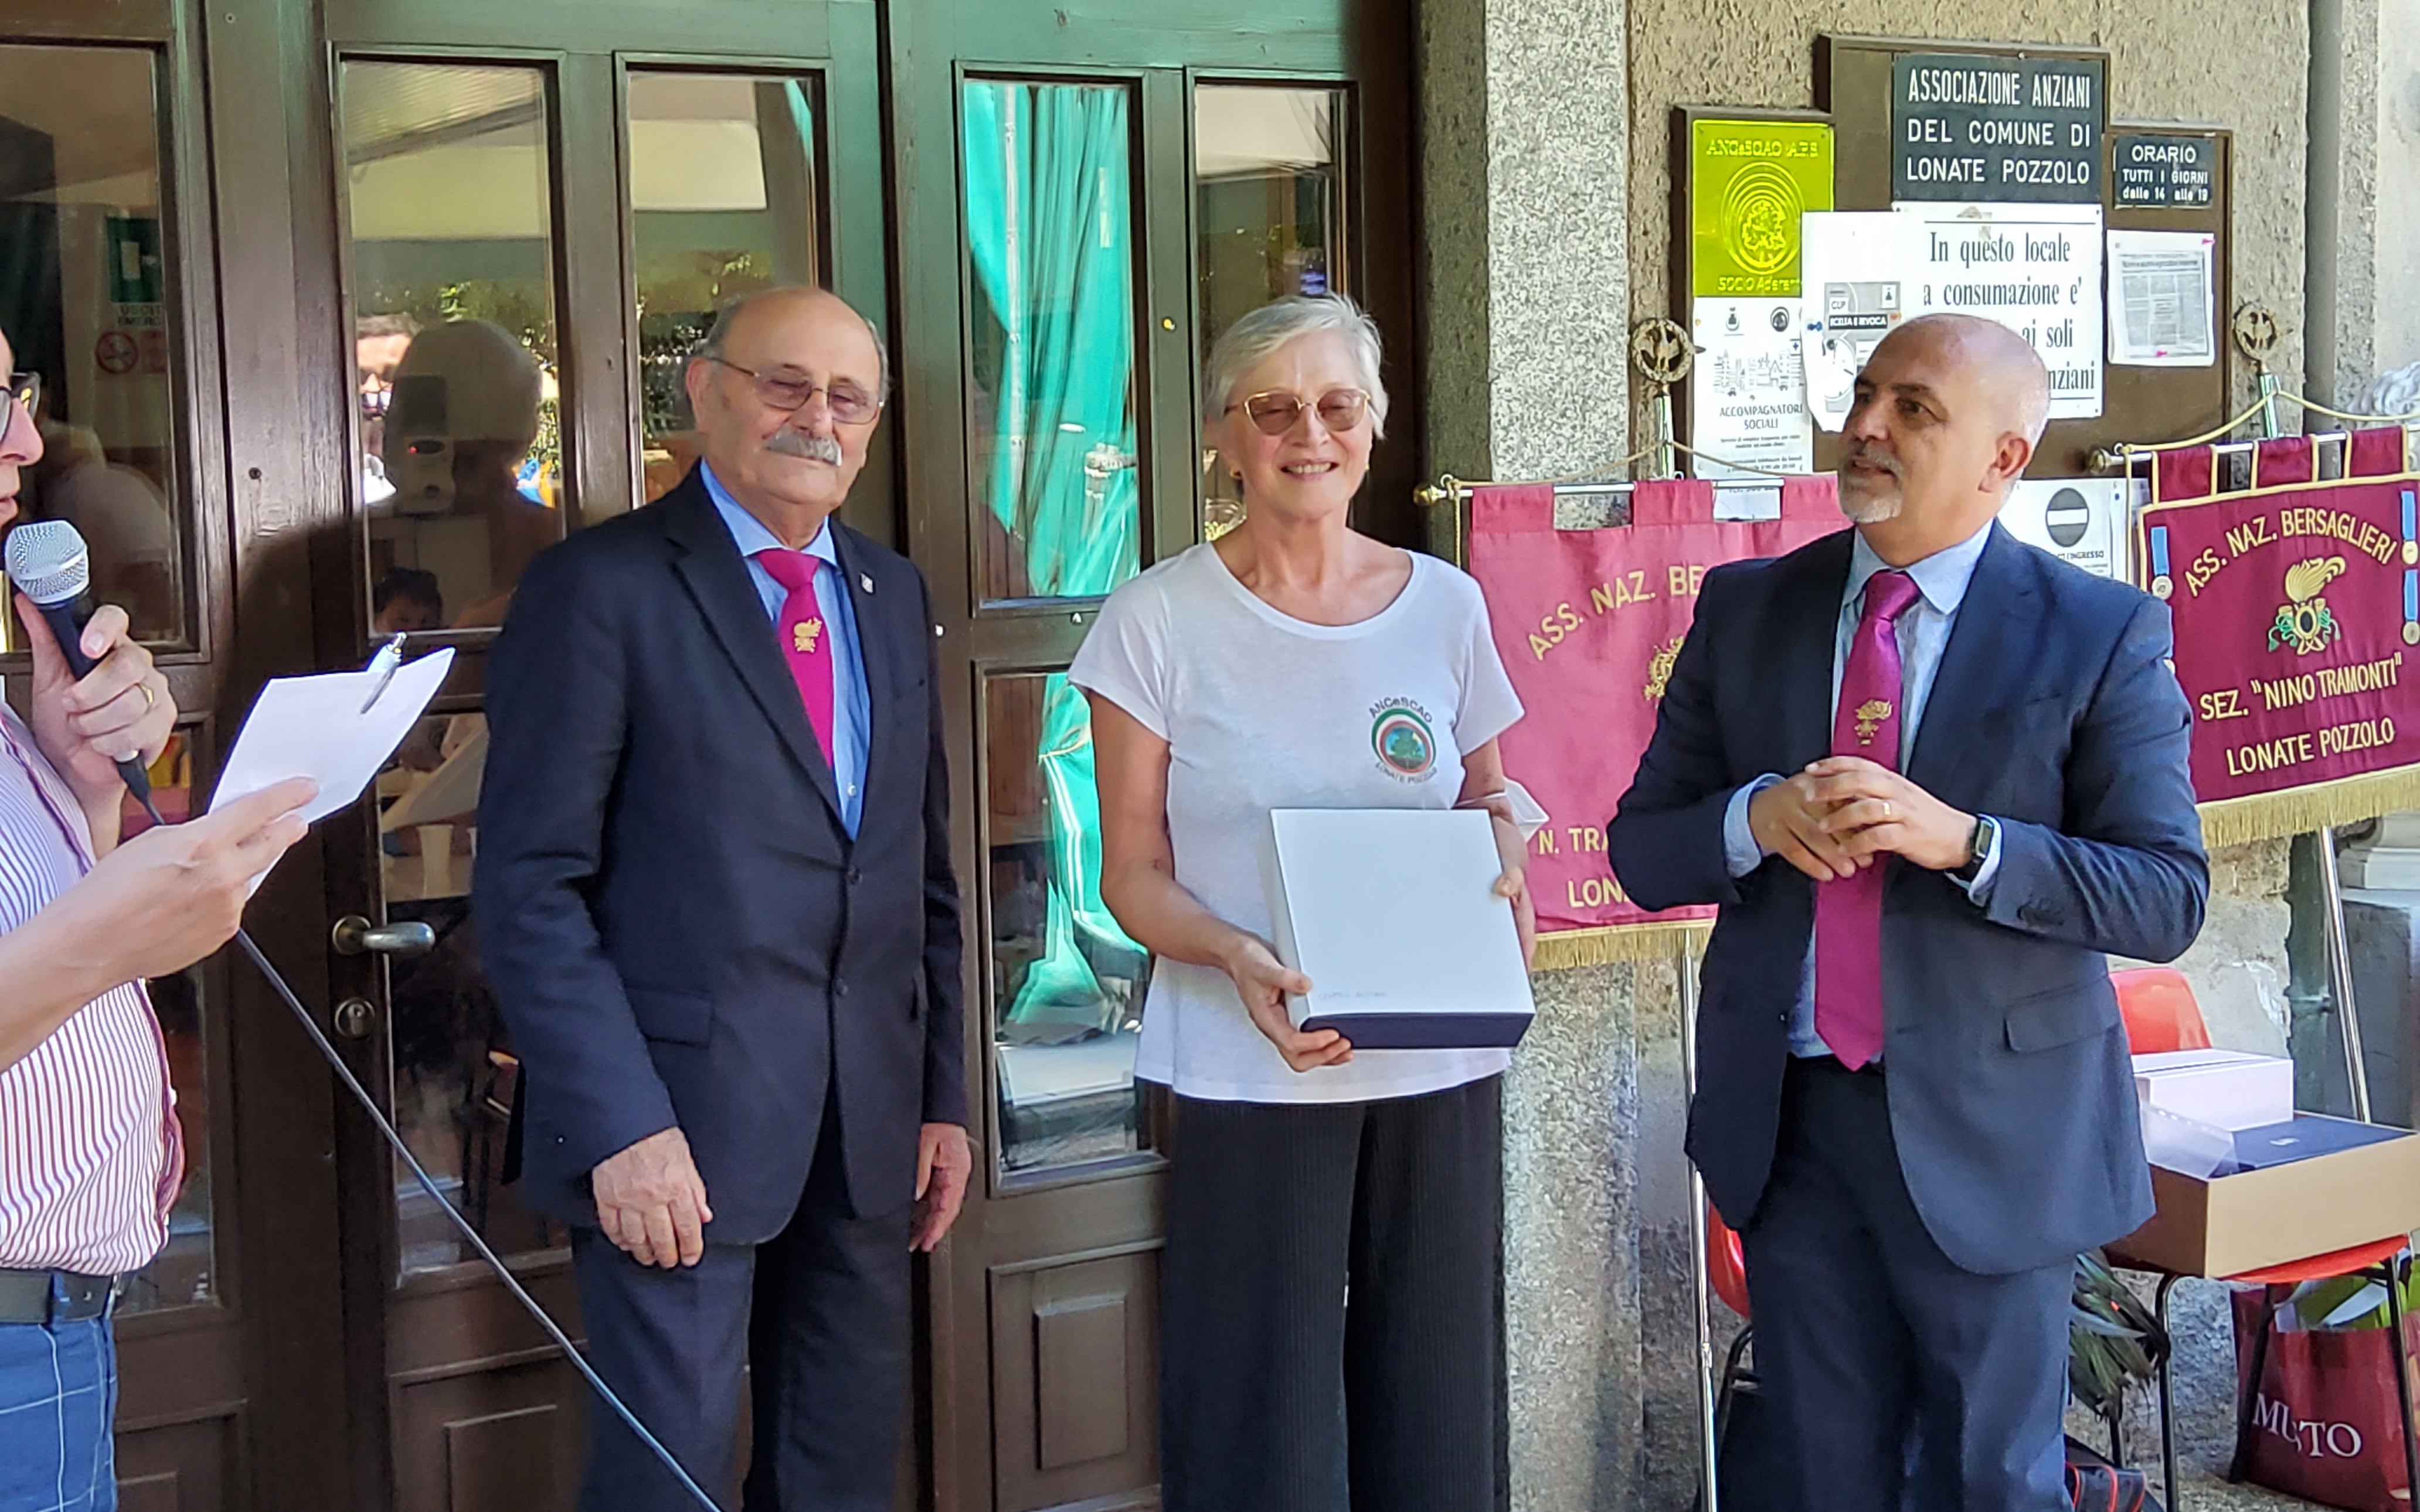 La Fanfara giramondo Tramonti - Crosta celebra il suo 55° anniversario